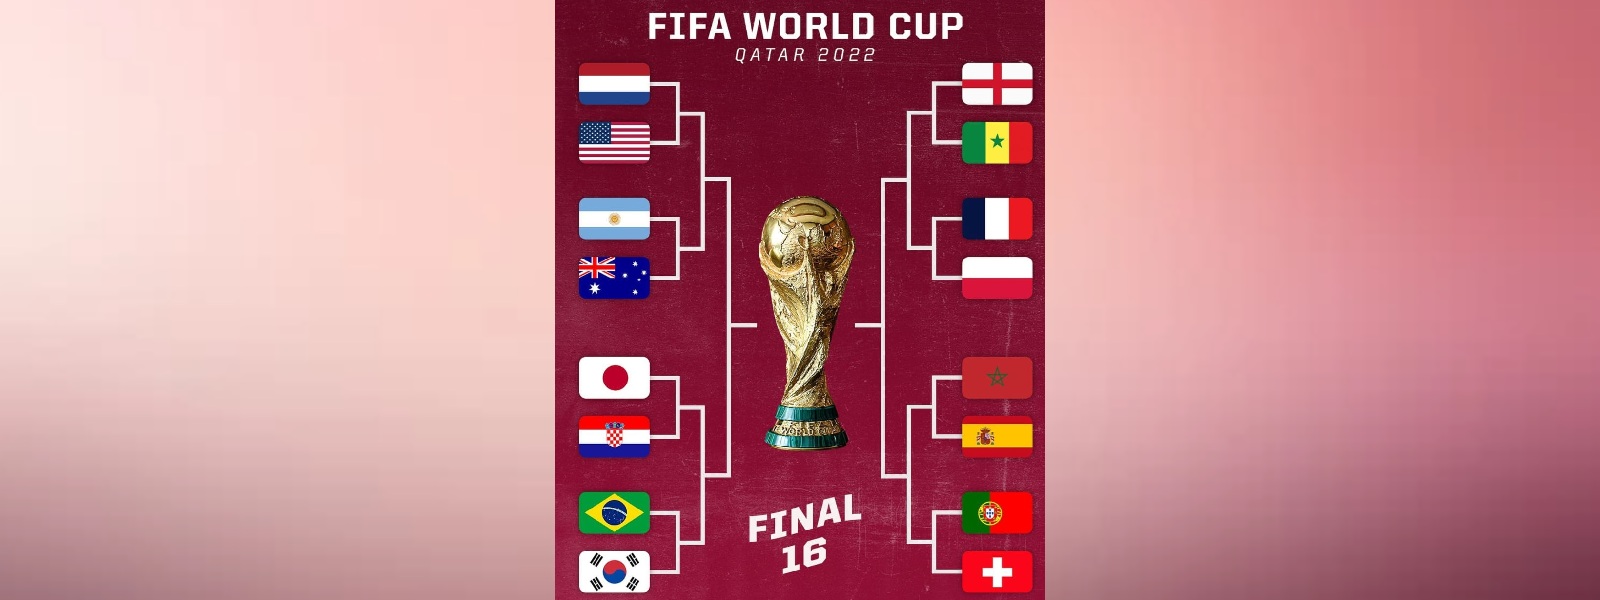 World Cup Final 16